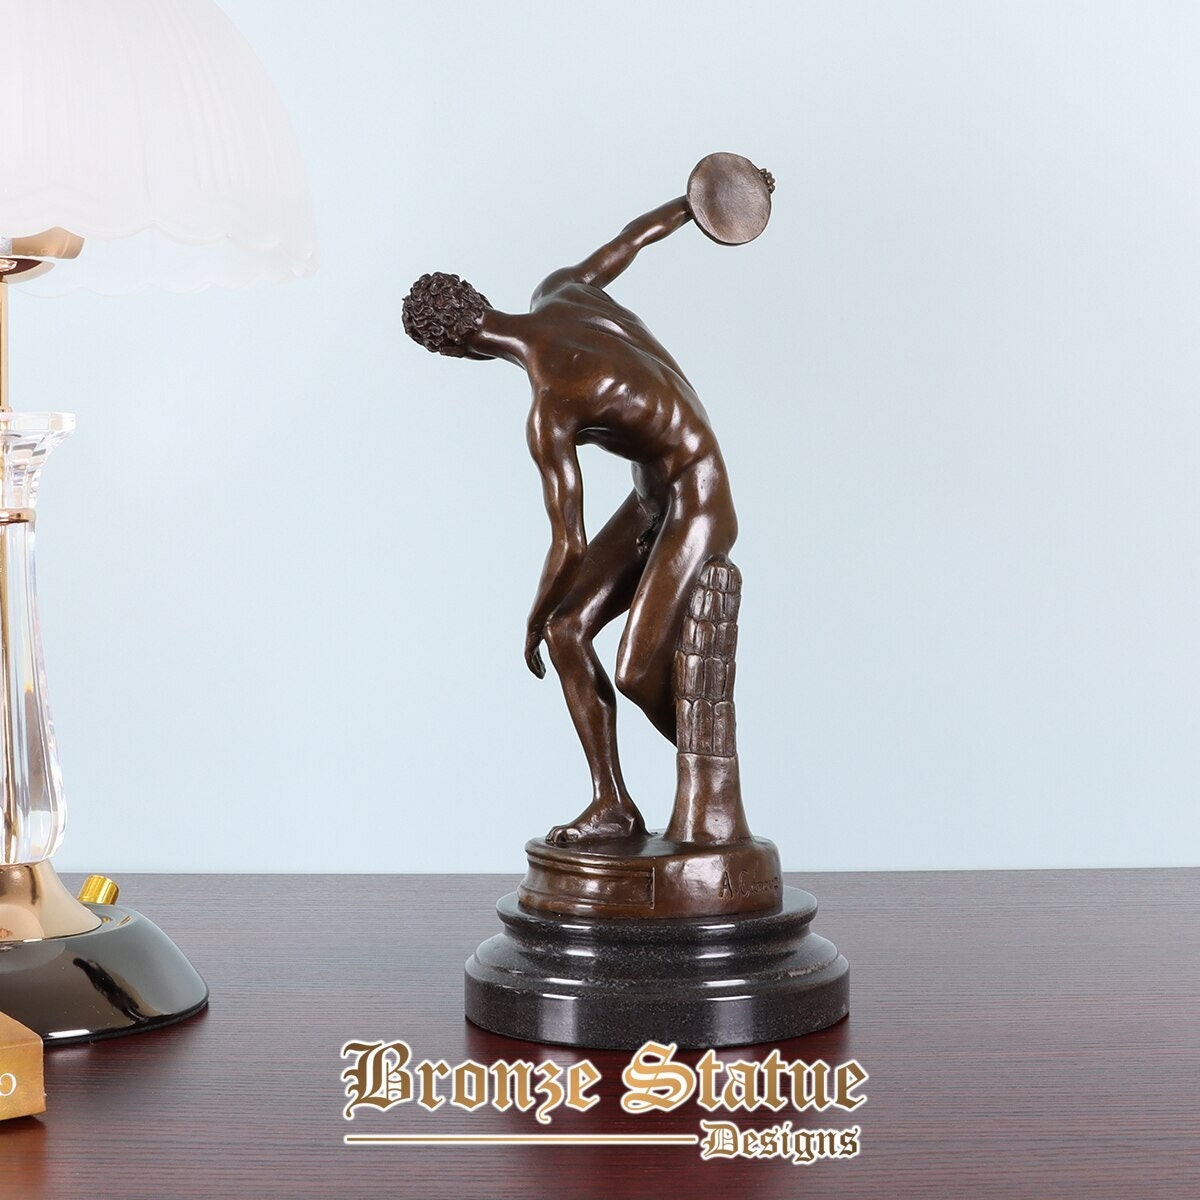 Bronze classic discus thrower statue discobolos sculpture by greek famous myron replica antique figurine art home decor